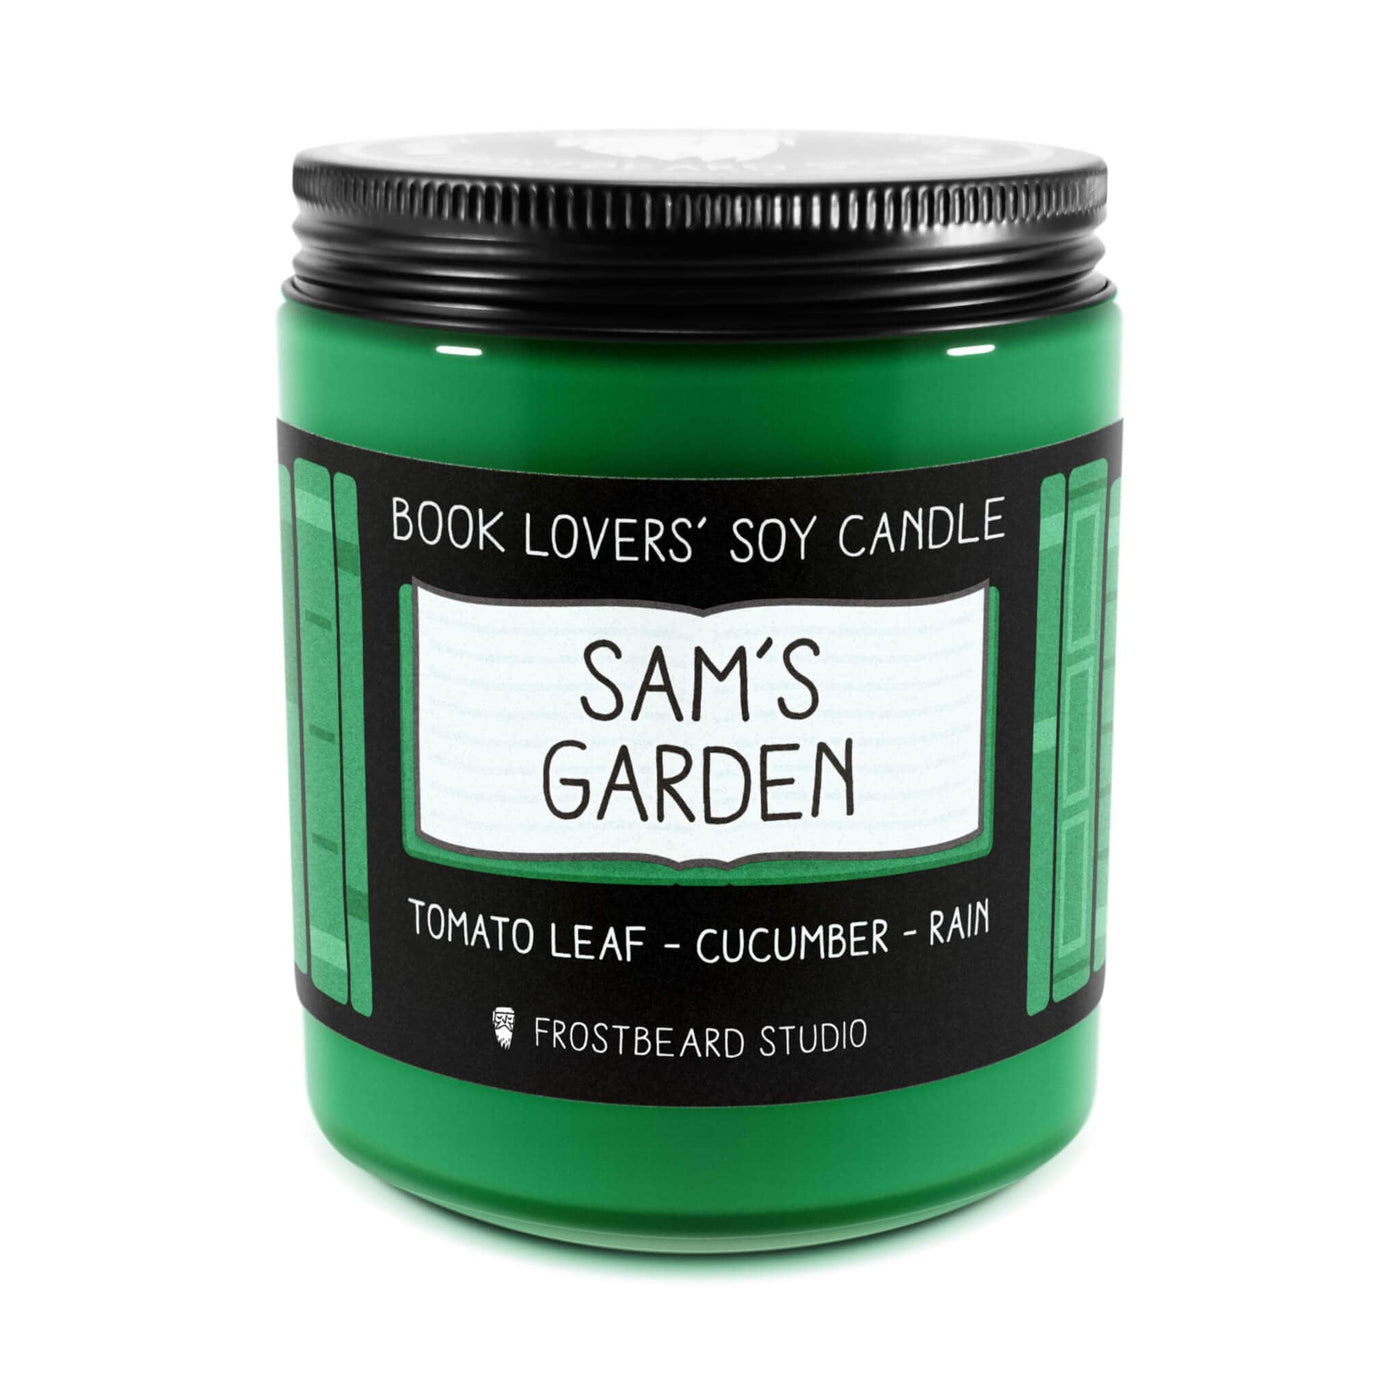 Sam's Garden  -  8 oz Jar  -  Book Lovers' Soy Candle  -  Frostbeard Studio